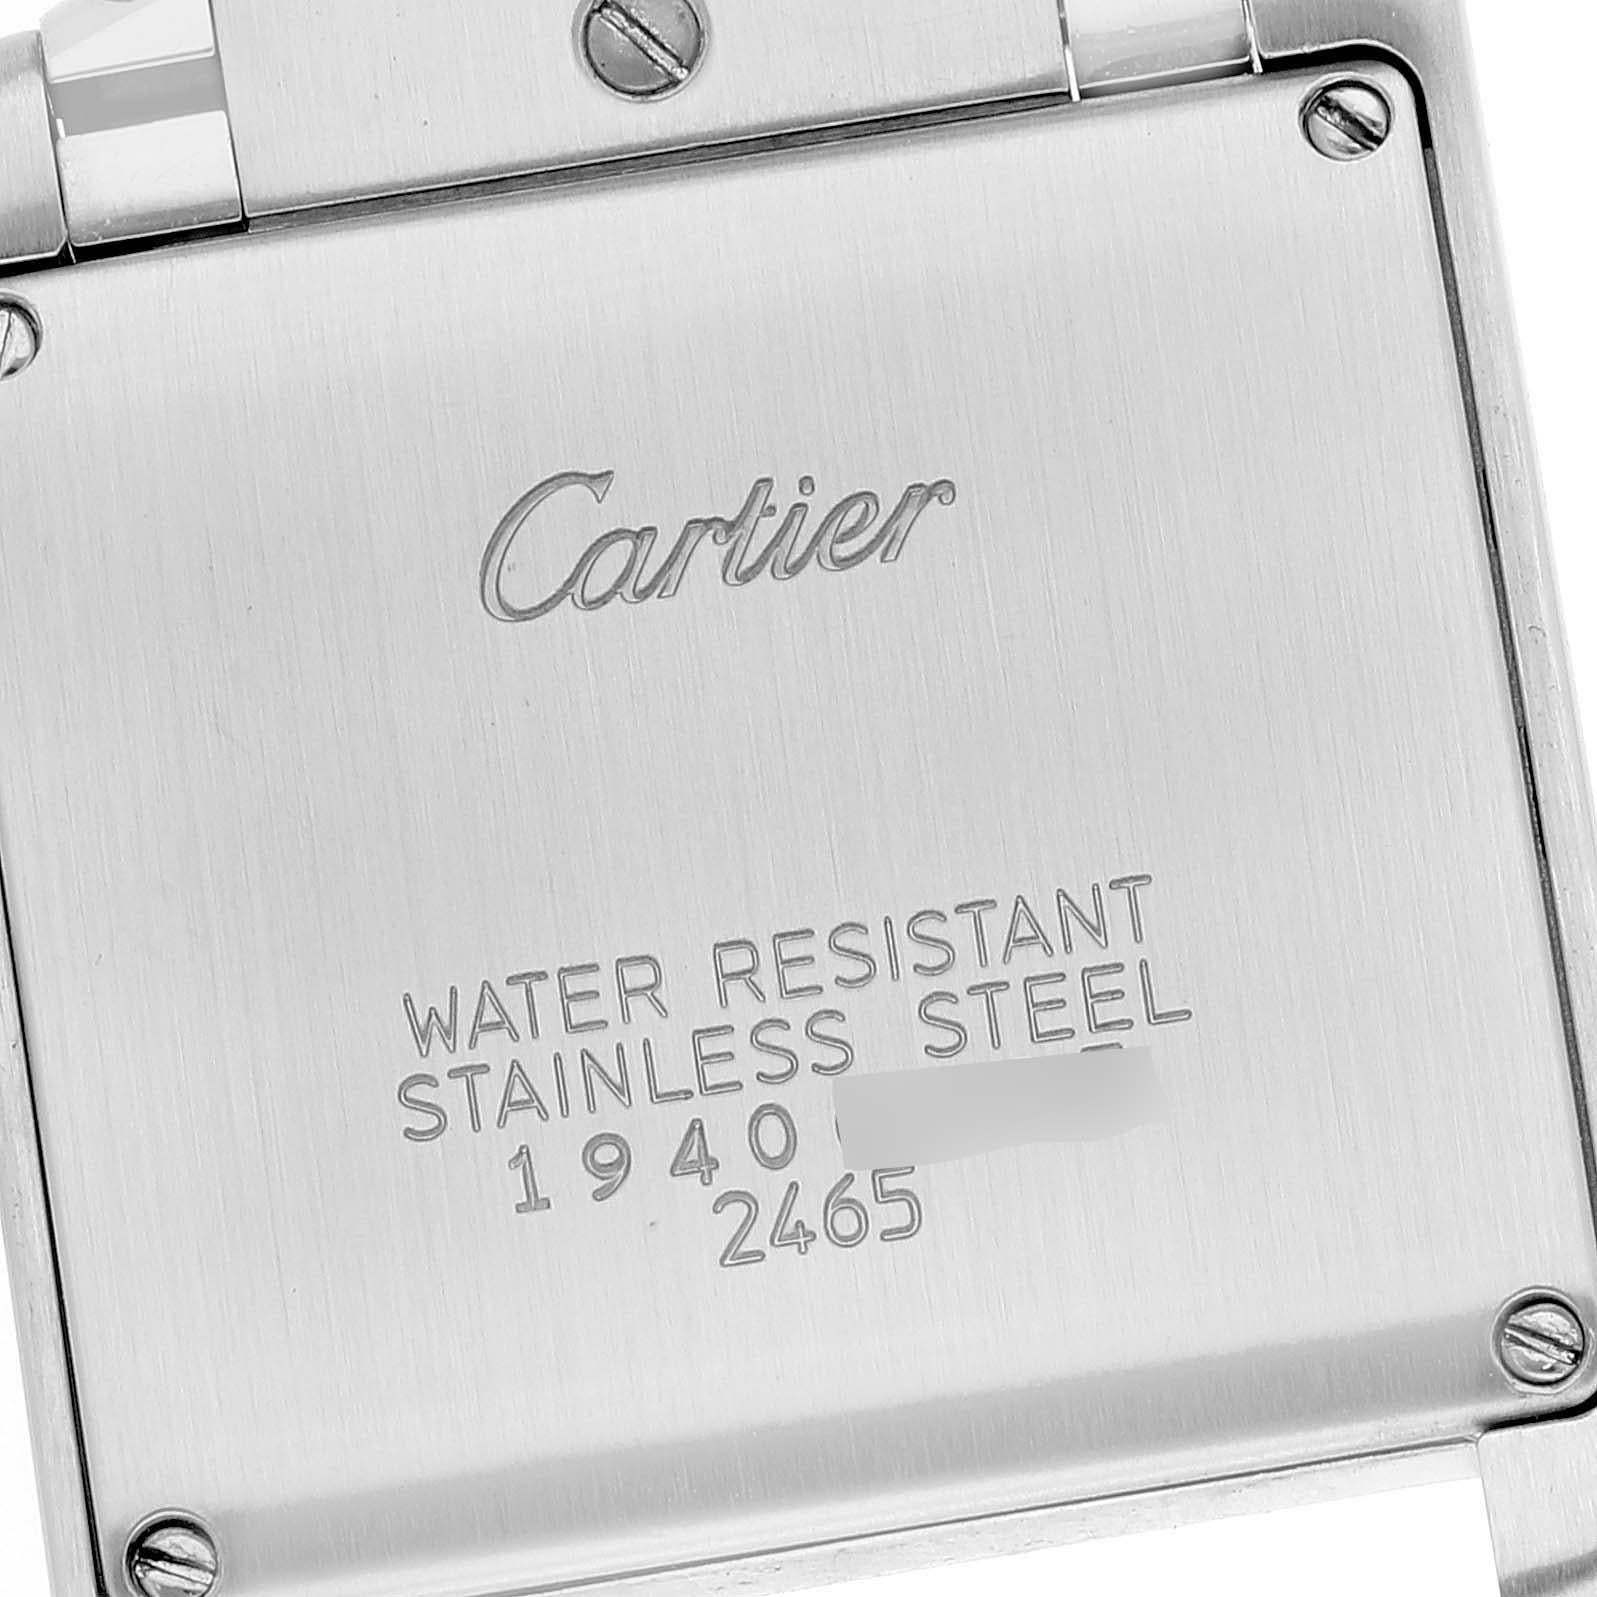 Cartier Tank Francaise Midsize Silver Dial Steel Ladies Watch W51011Q3 2